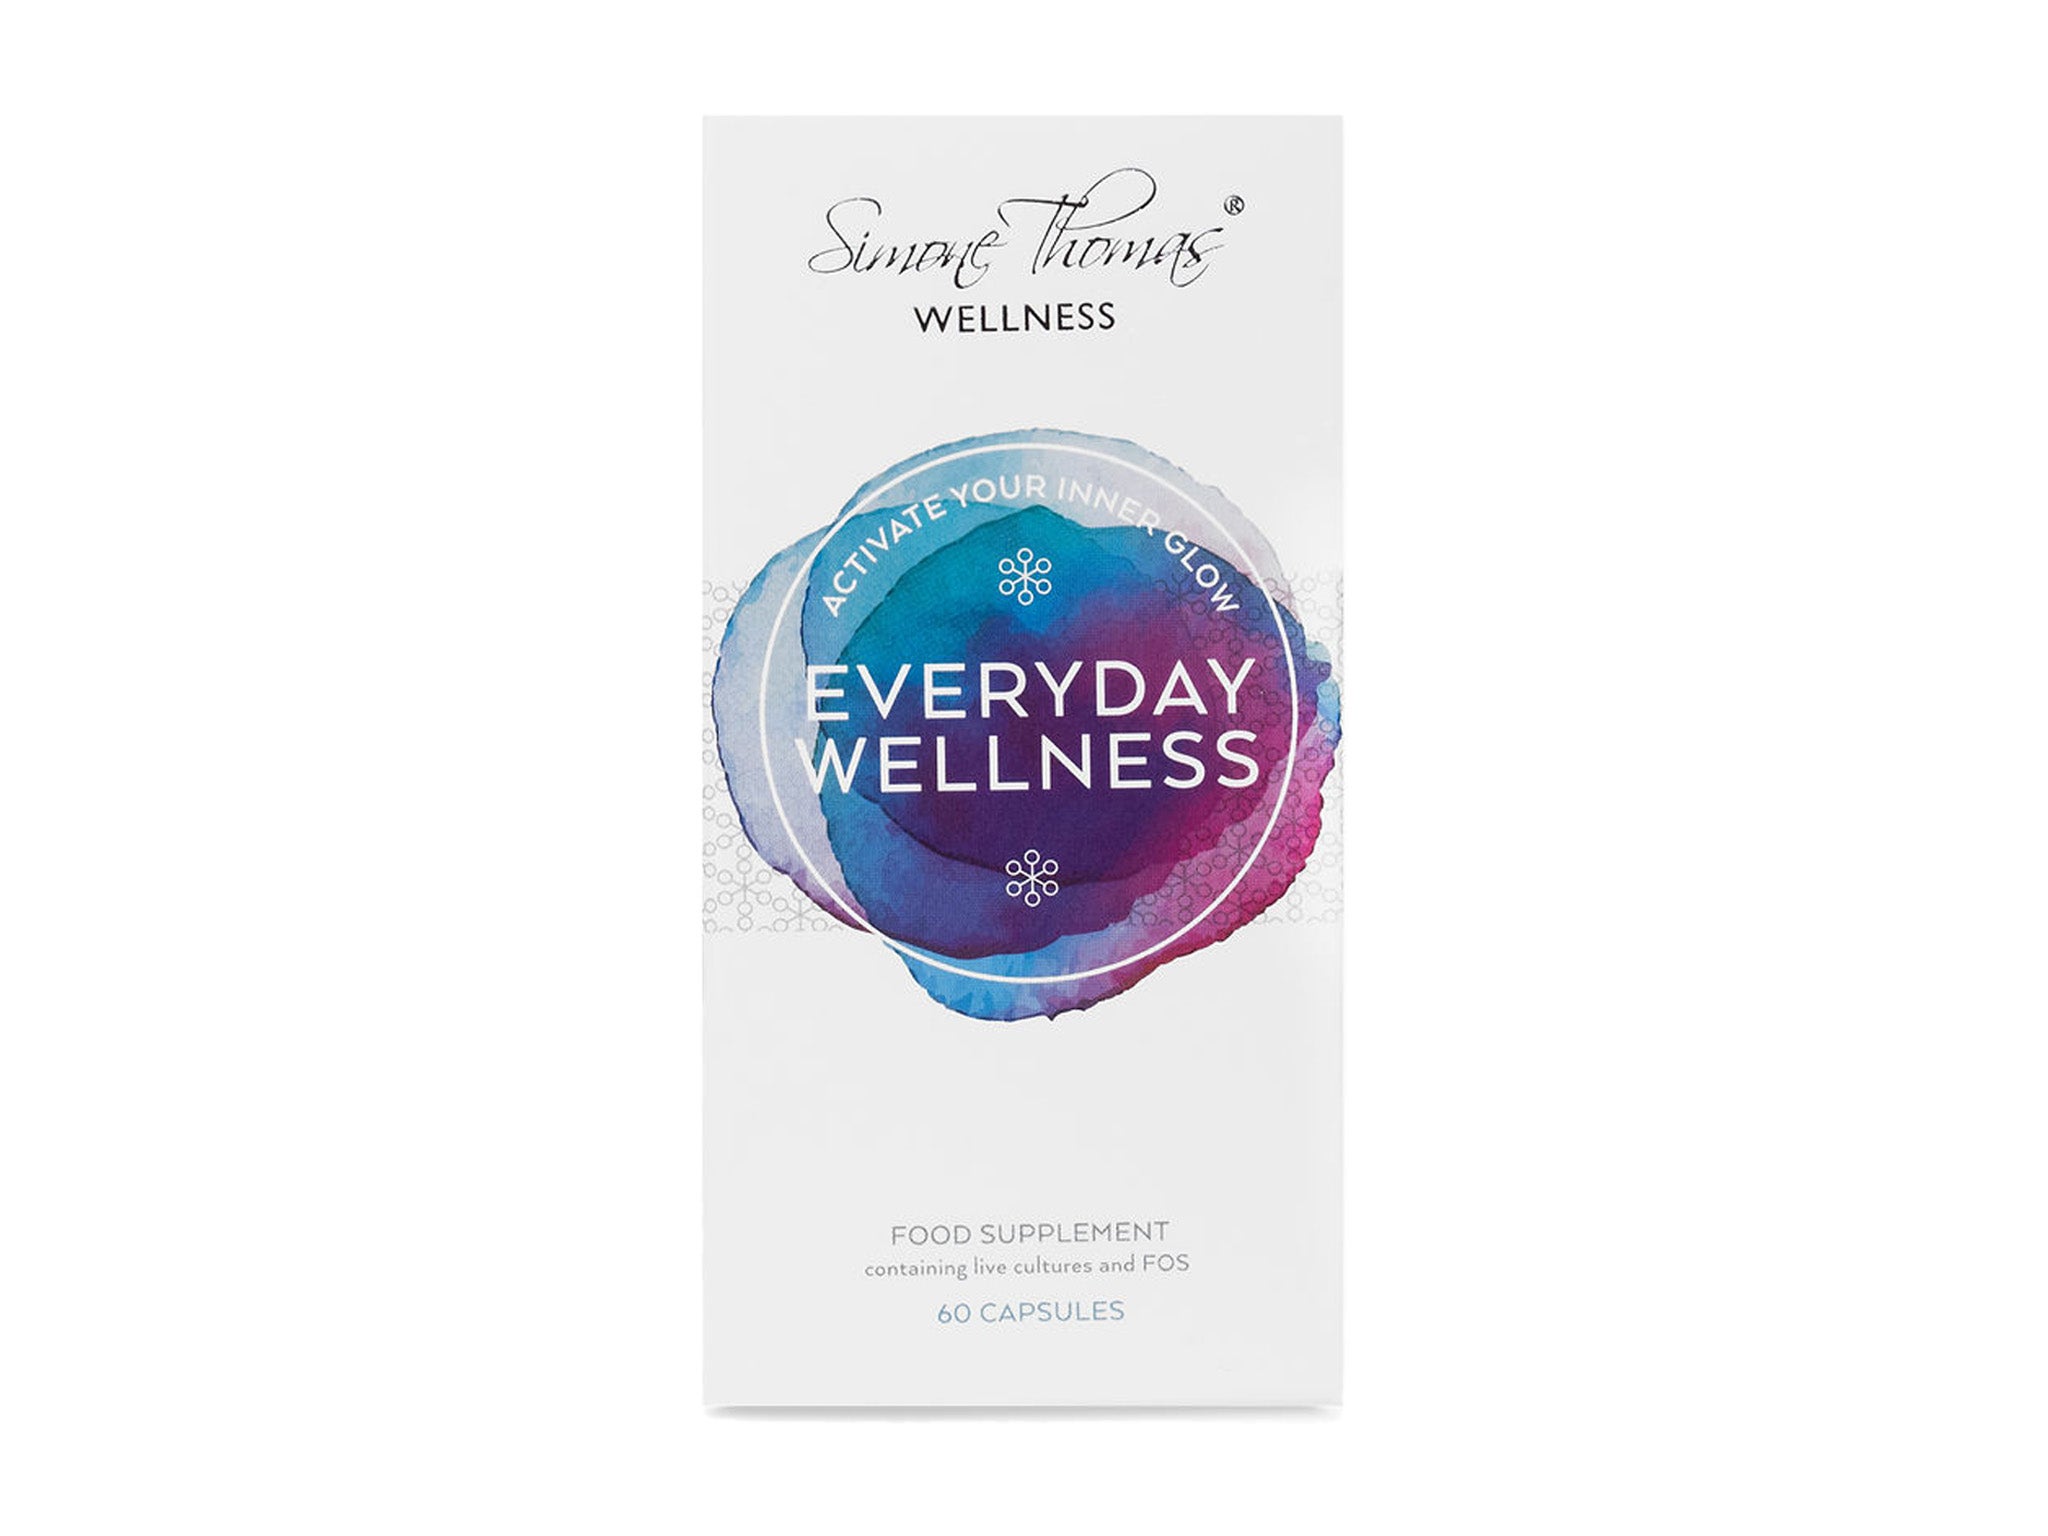 Simone Thomas Wellness everyday wellness, 60 capsules  .jpg